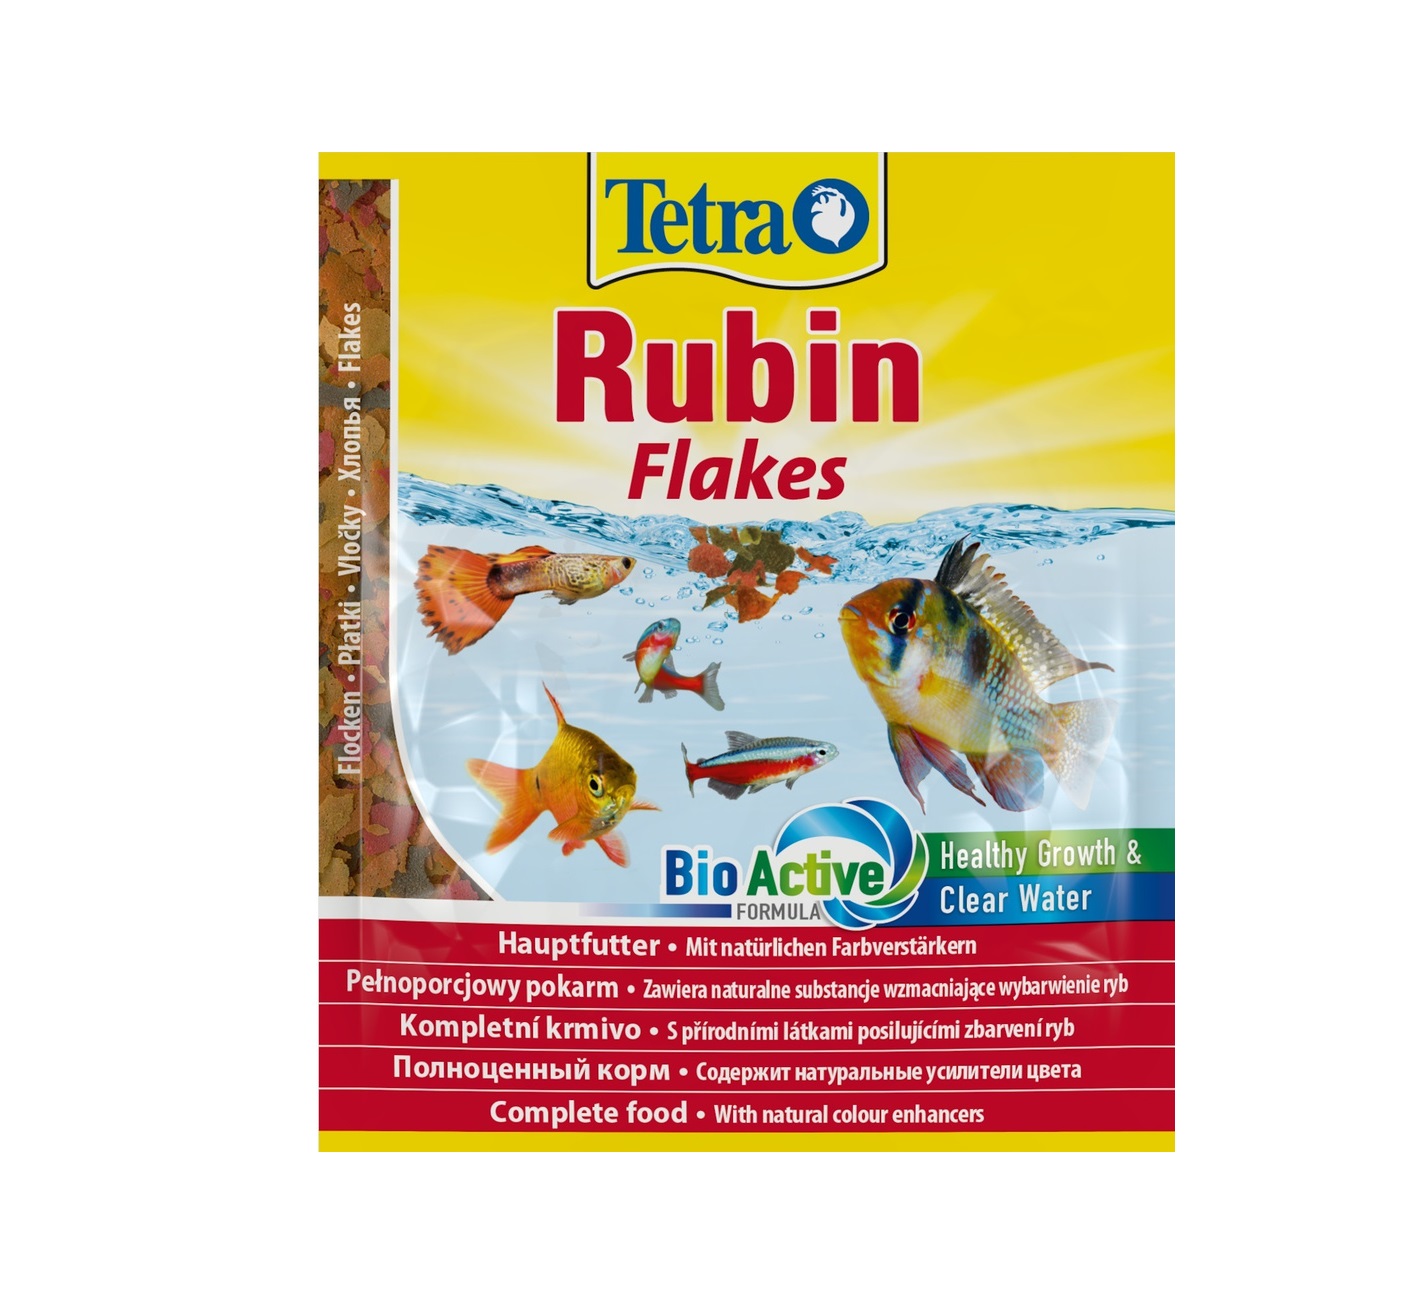 Тетра Рубин 12гр (Rubin Flakes) - Хлопья для Окраса, для всех видов рыб (Tetra)